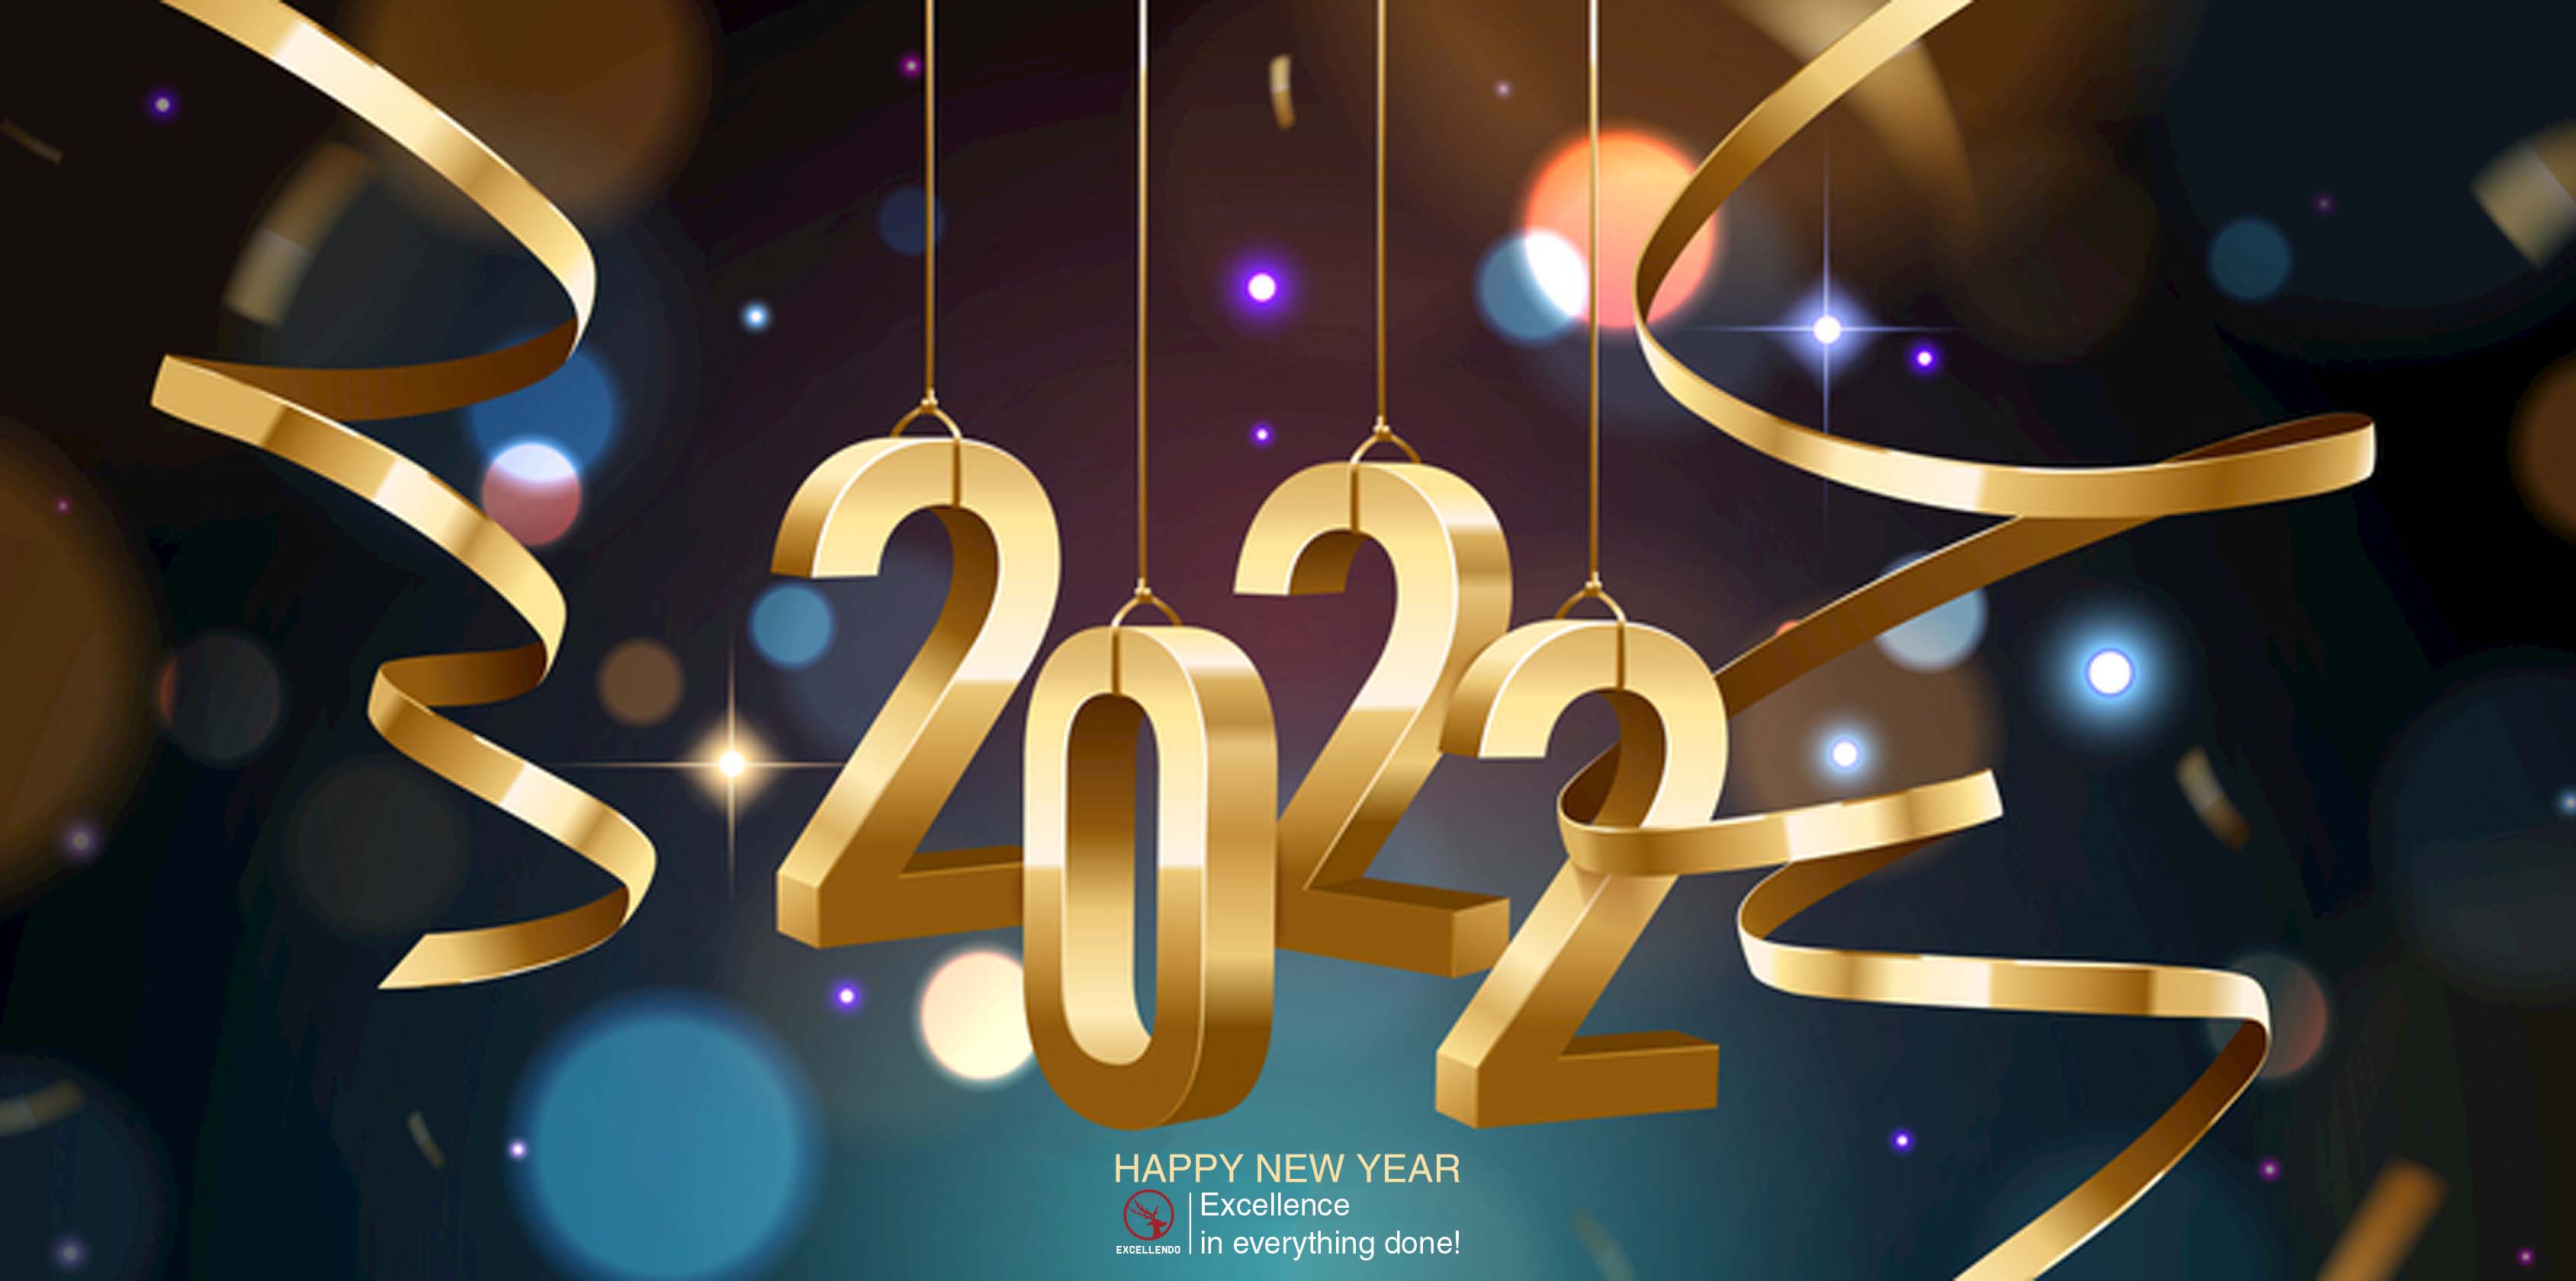 Happy New Year 2022 